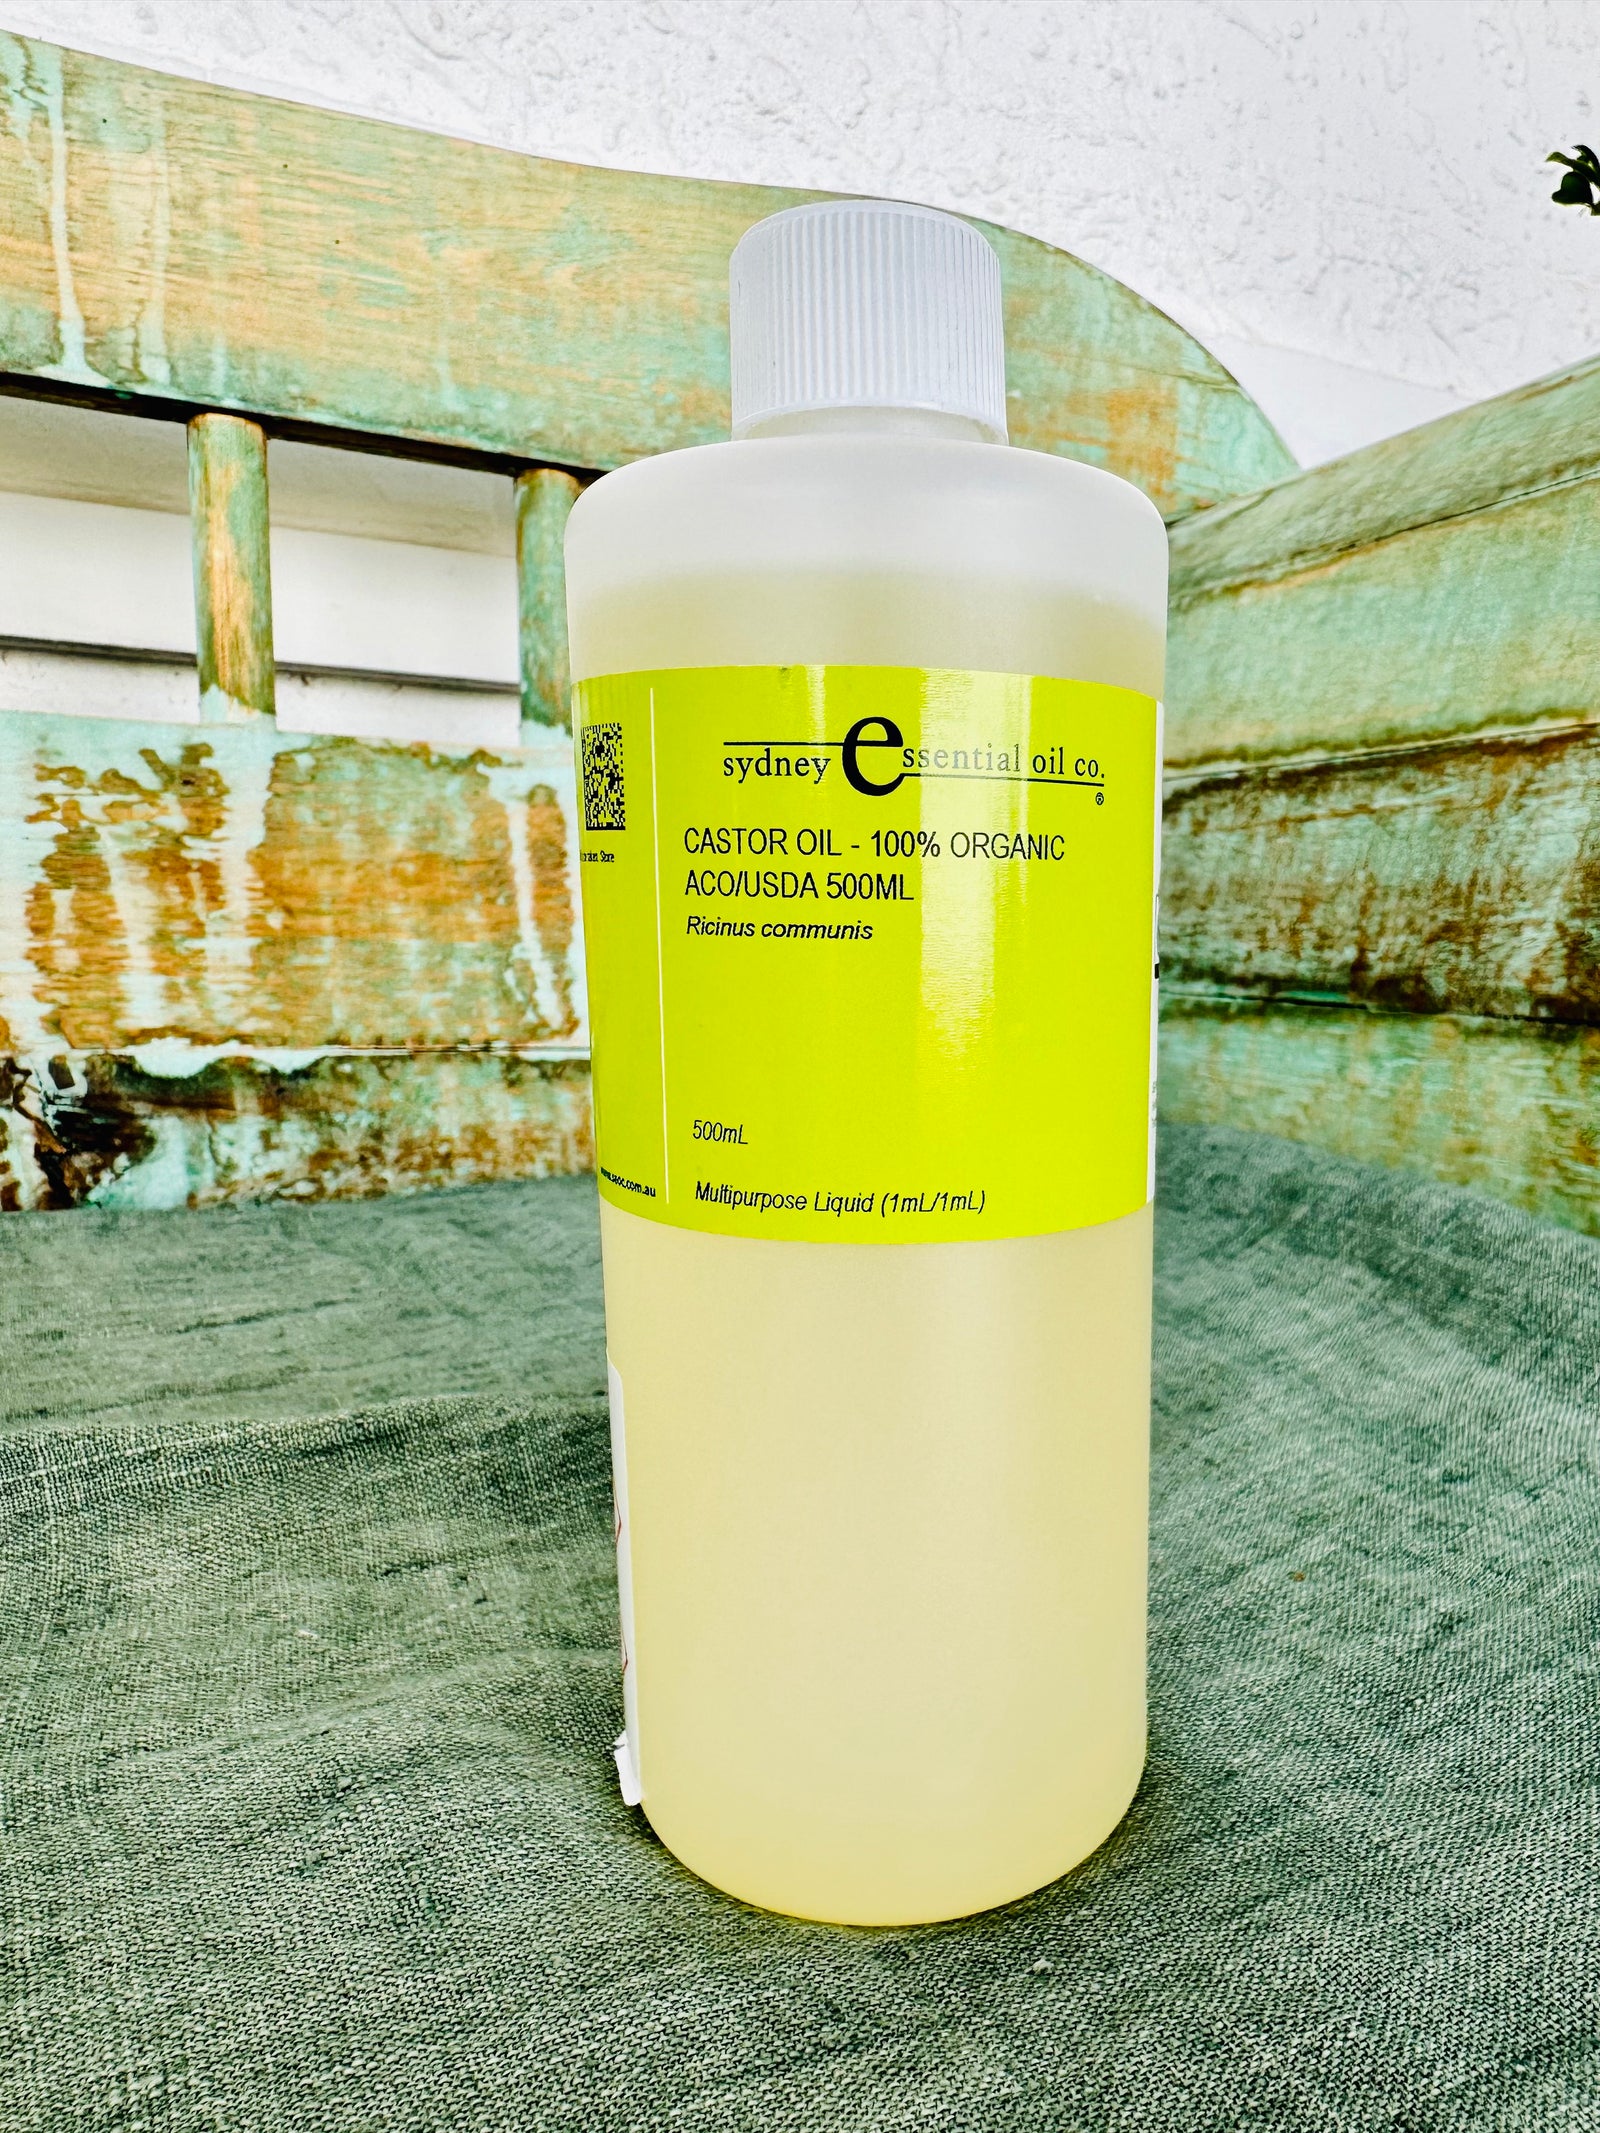 Essential Oil Co. Castor Oil 500ml